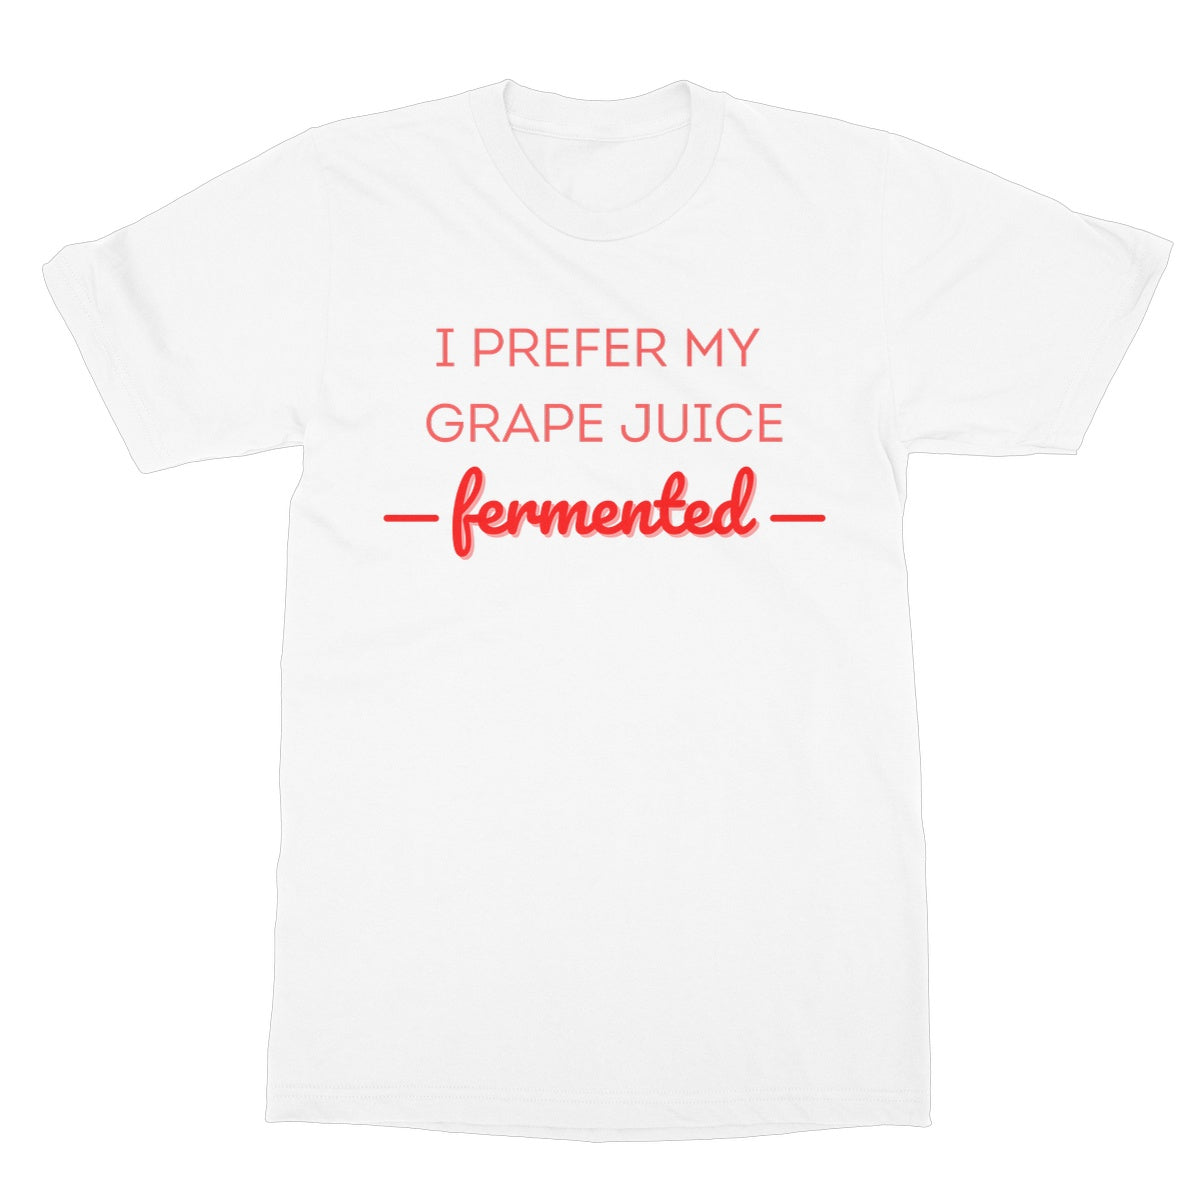 I prefer my grape juice fermented t shirt white